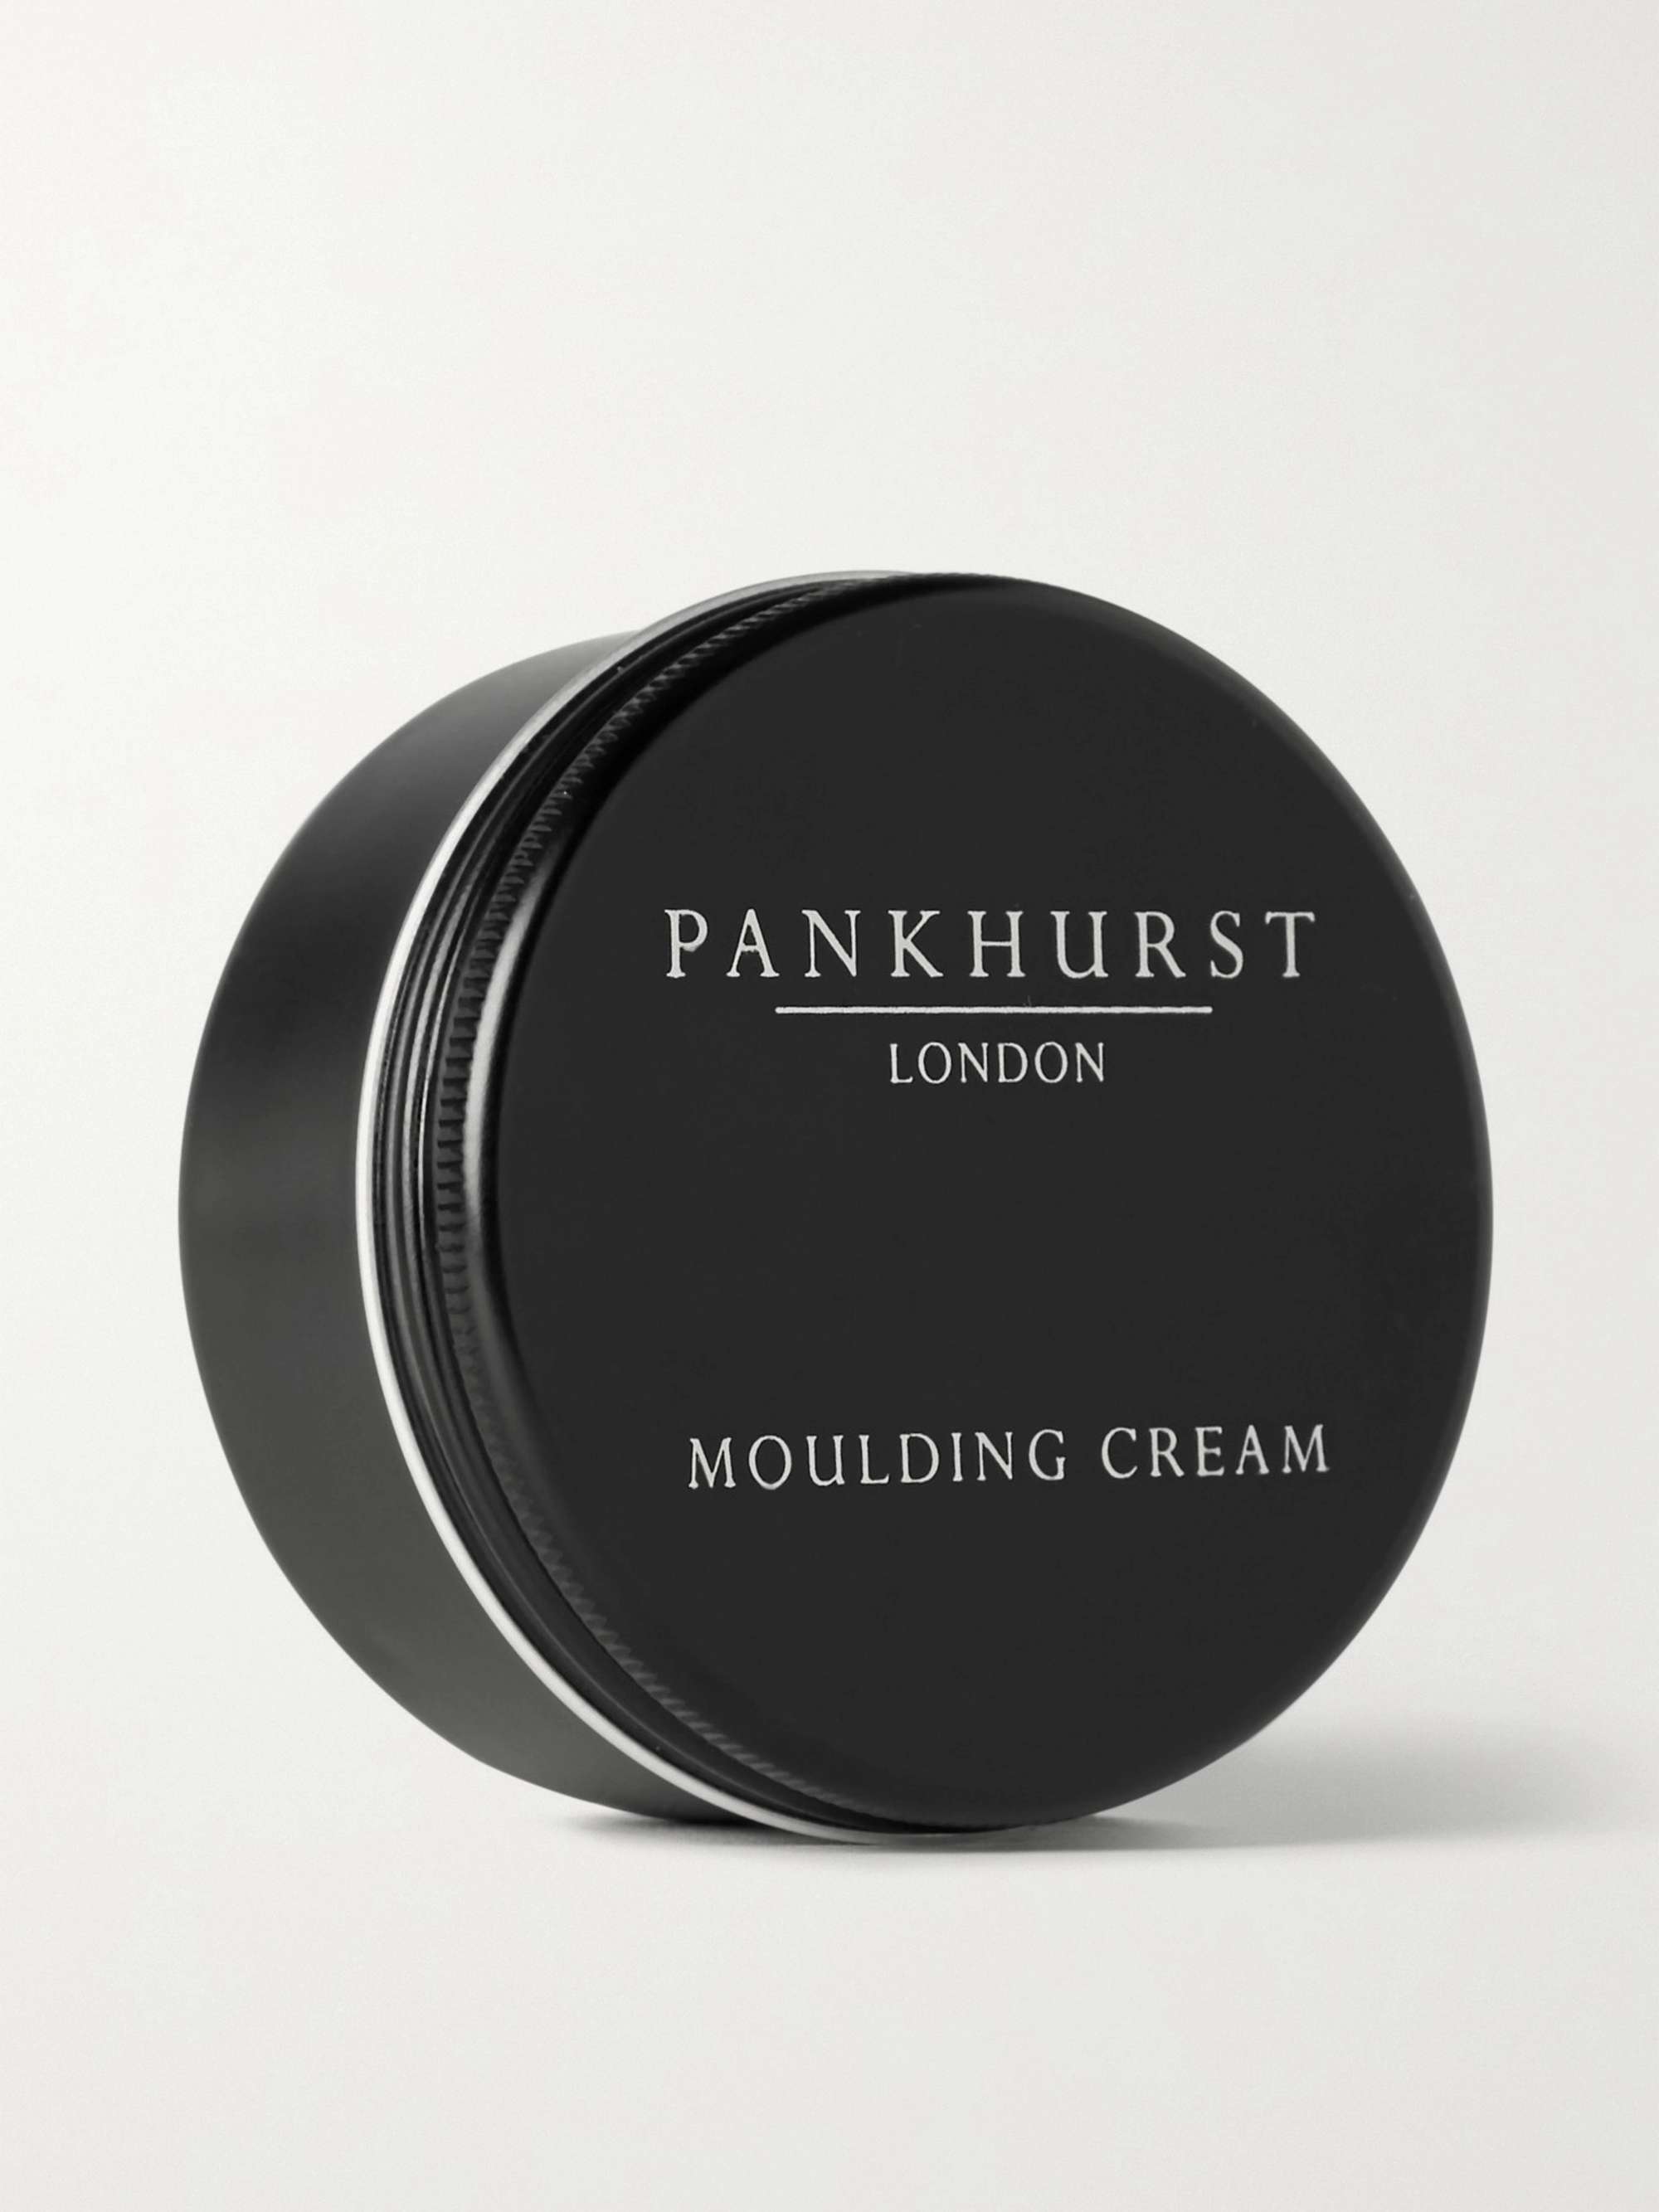 PANKHURST LONDON Moulding Cream, 75ml